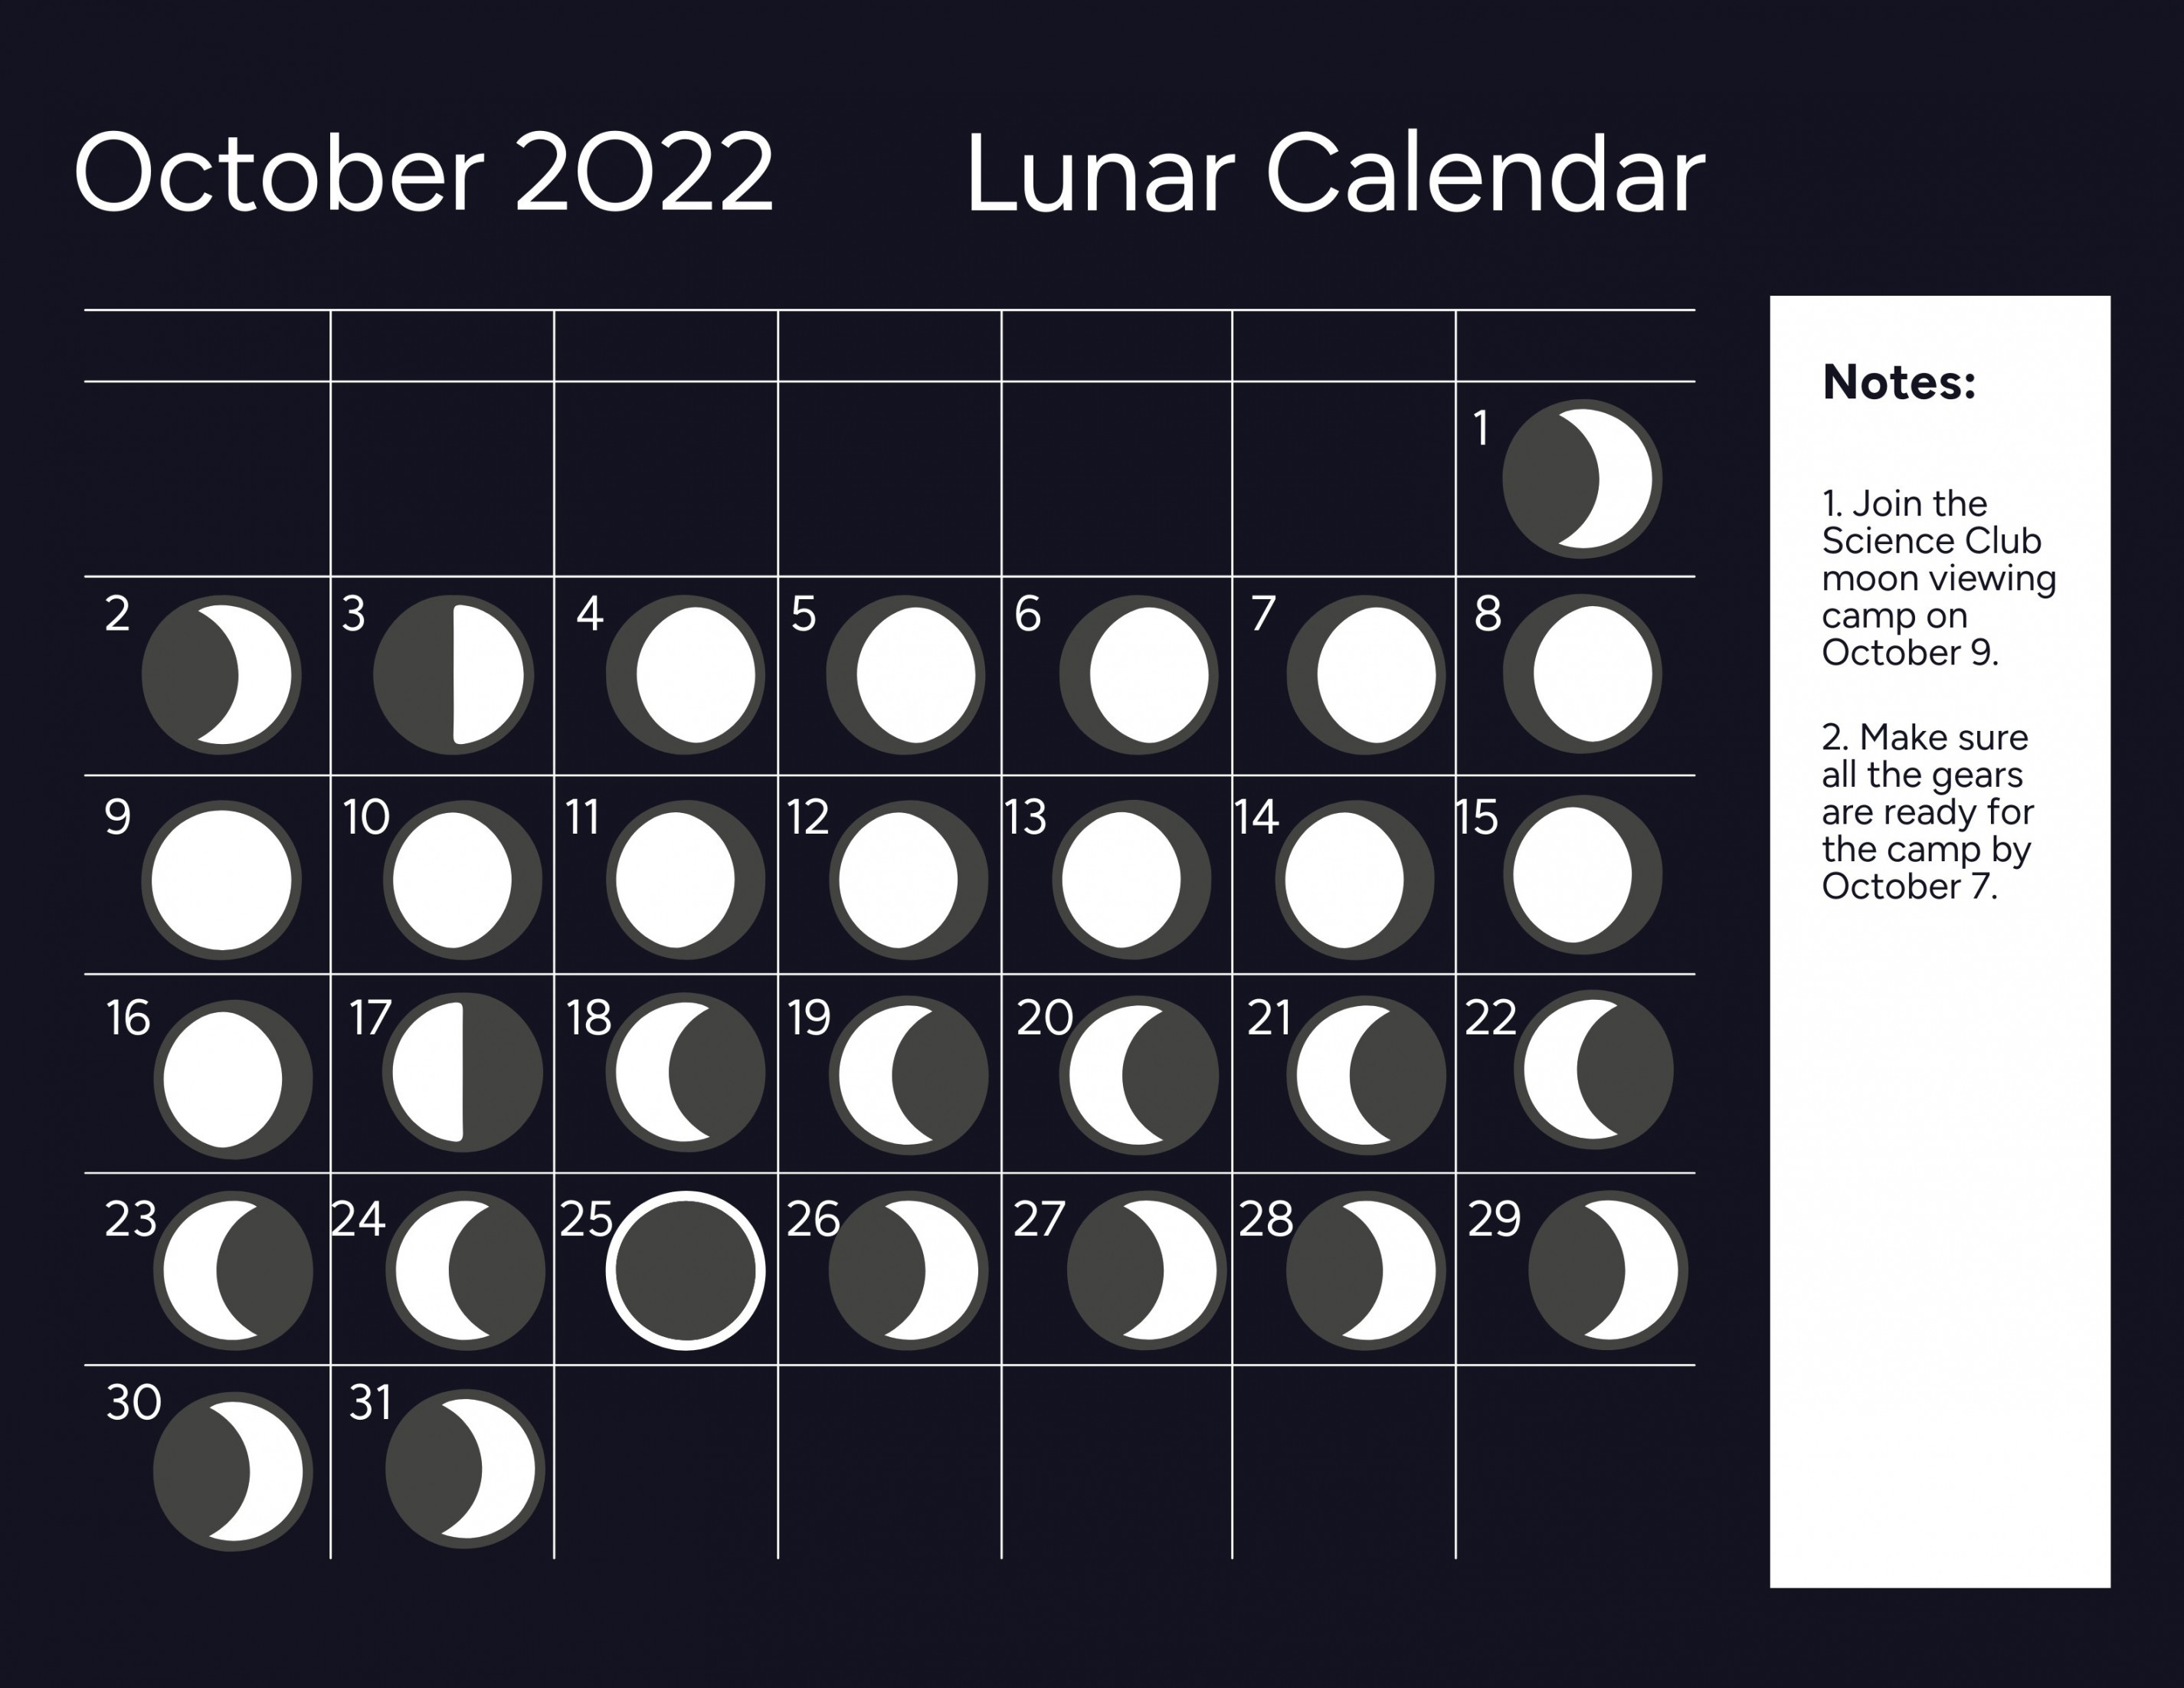 Lunar Calendar October  - Download in Word, Illustrator, PSD